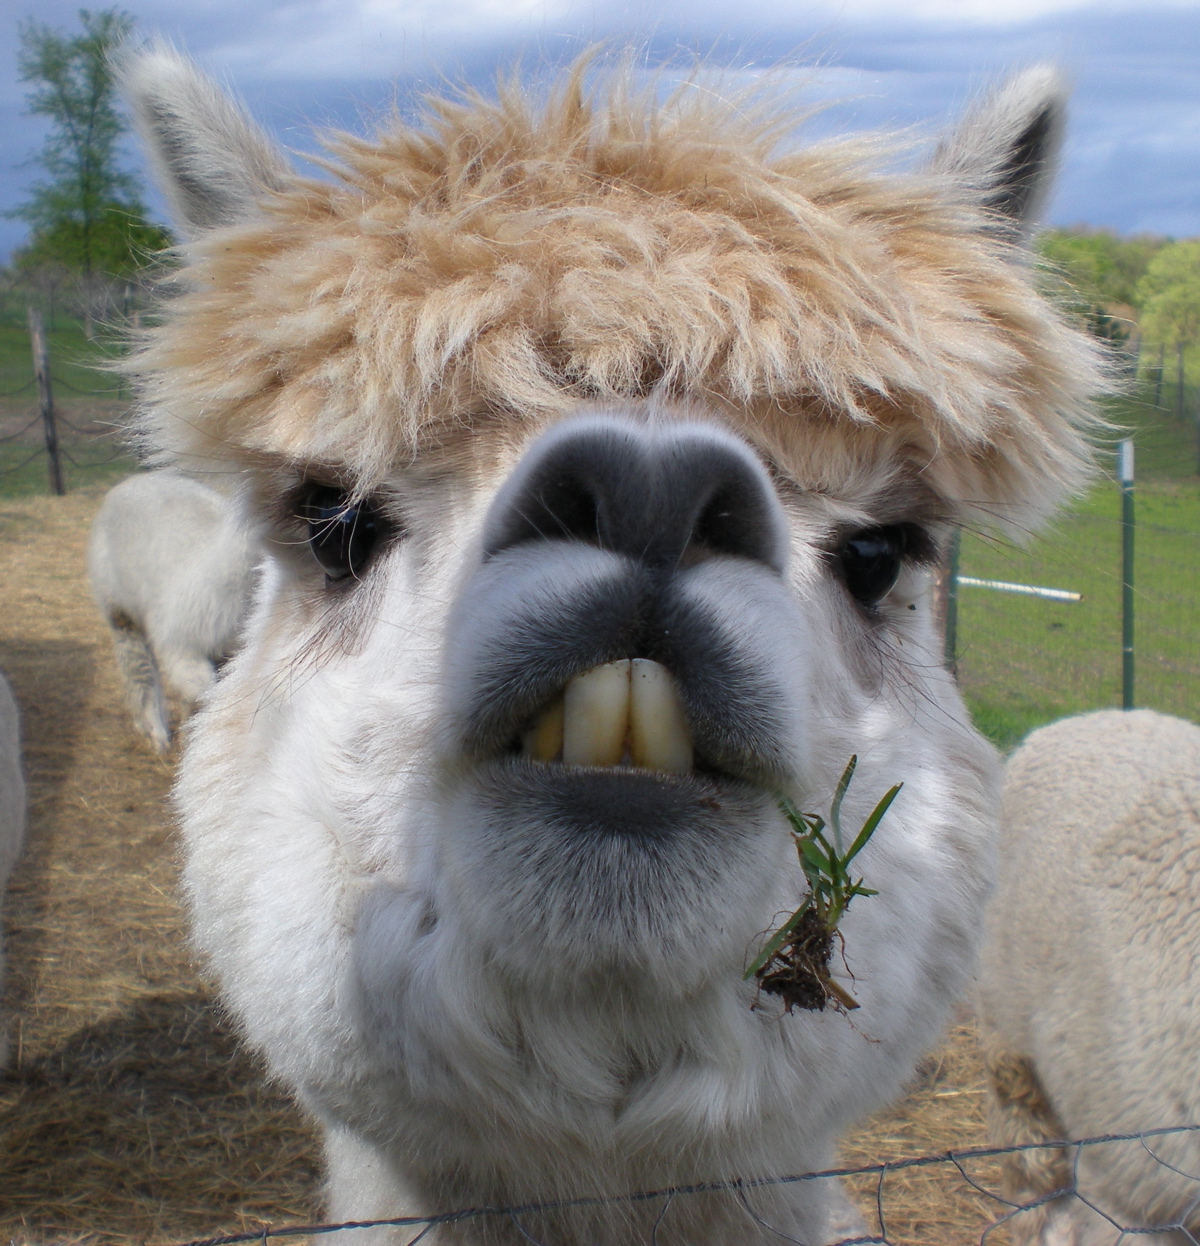 File:Close up of an Alpaca's face  - Wikipedia